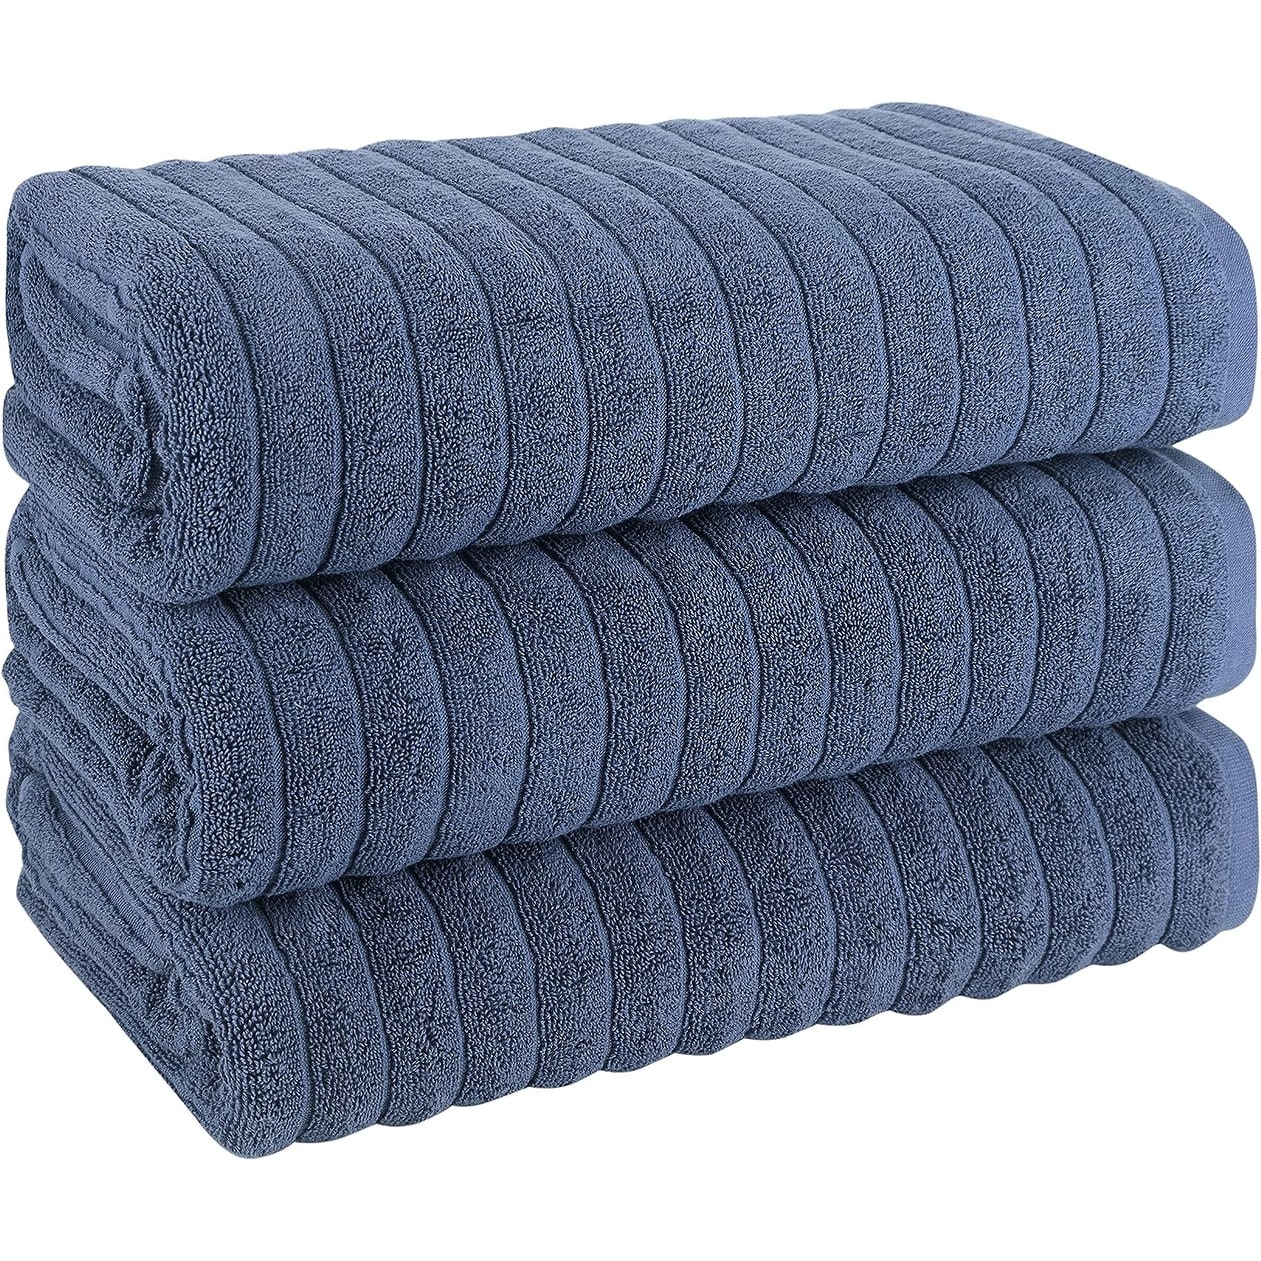 Cotton Ribbed Bath Sheet Towel Set of 3 - 40X67 